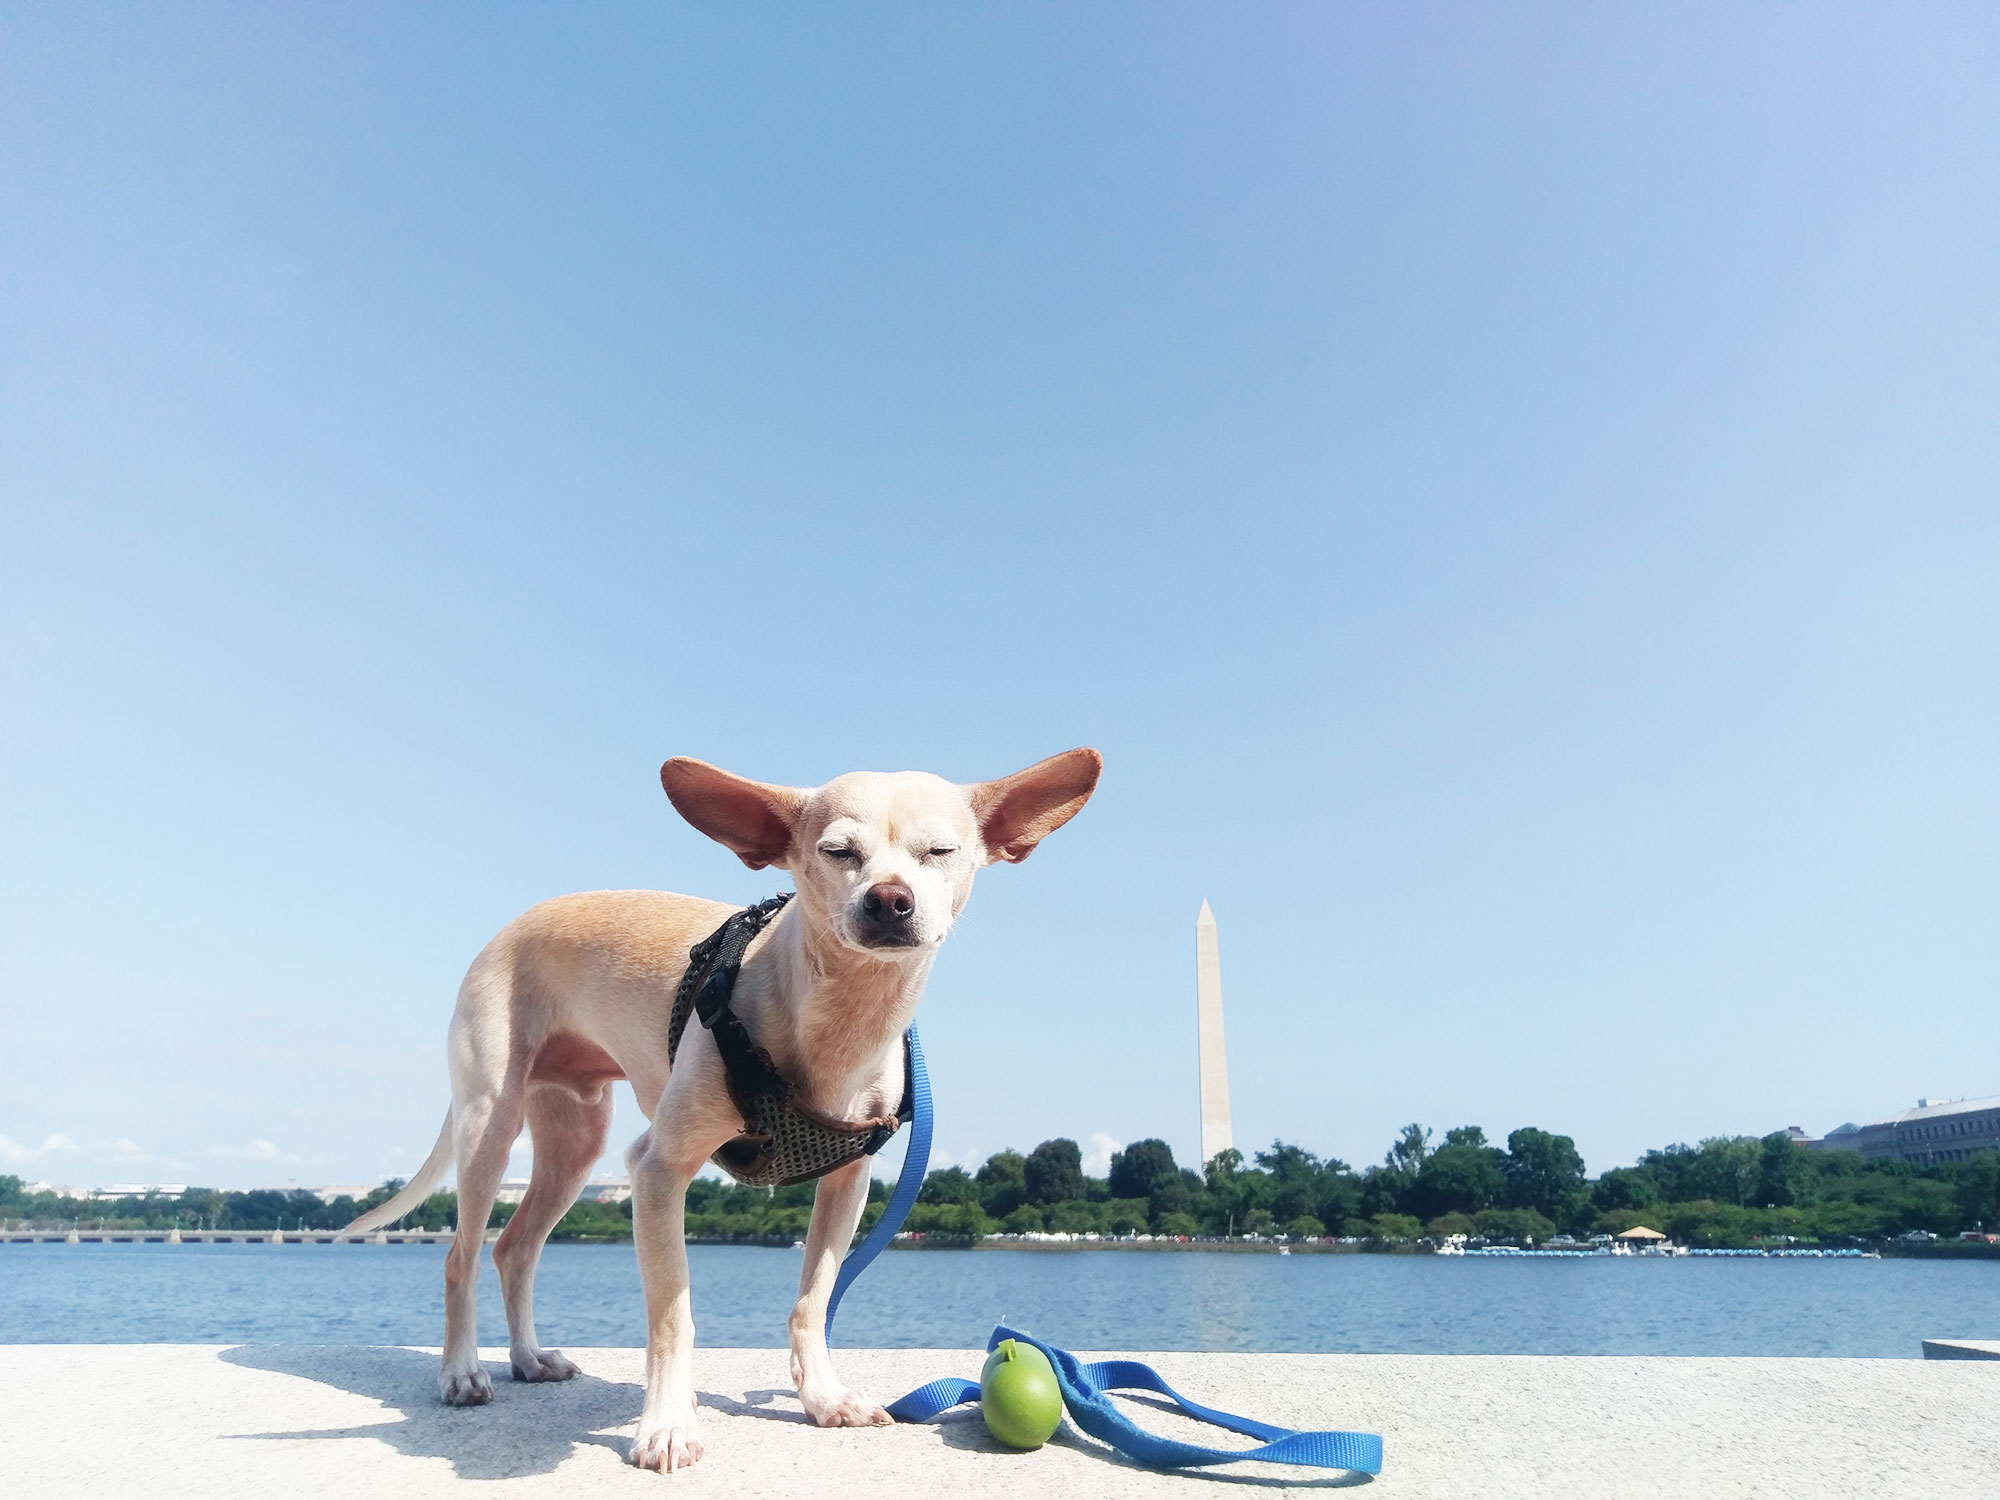 Gunter at the Washington Monument in D.C.